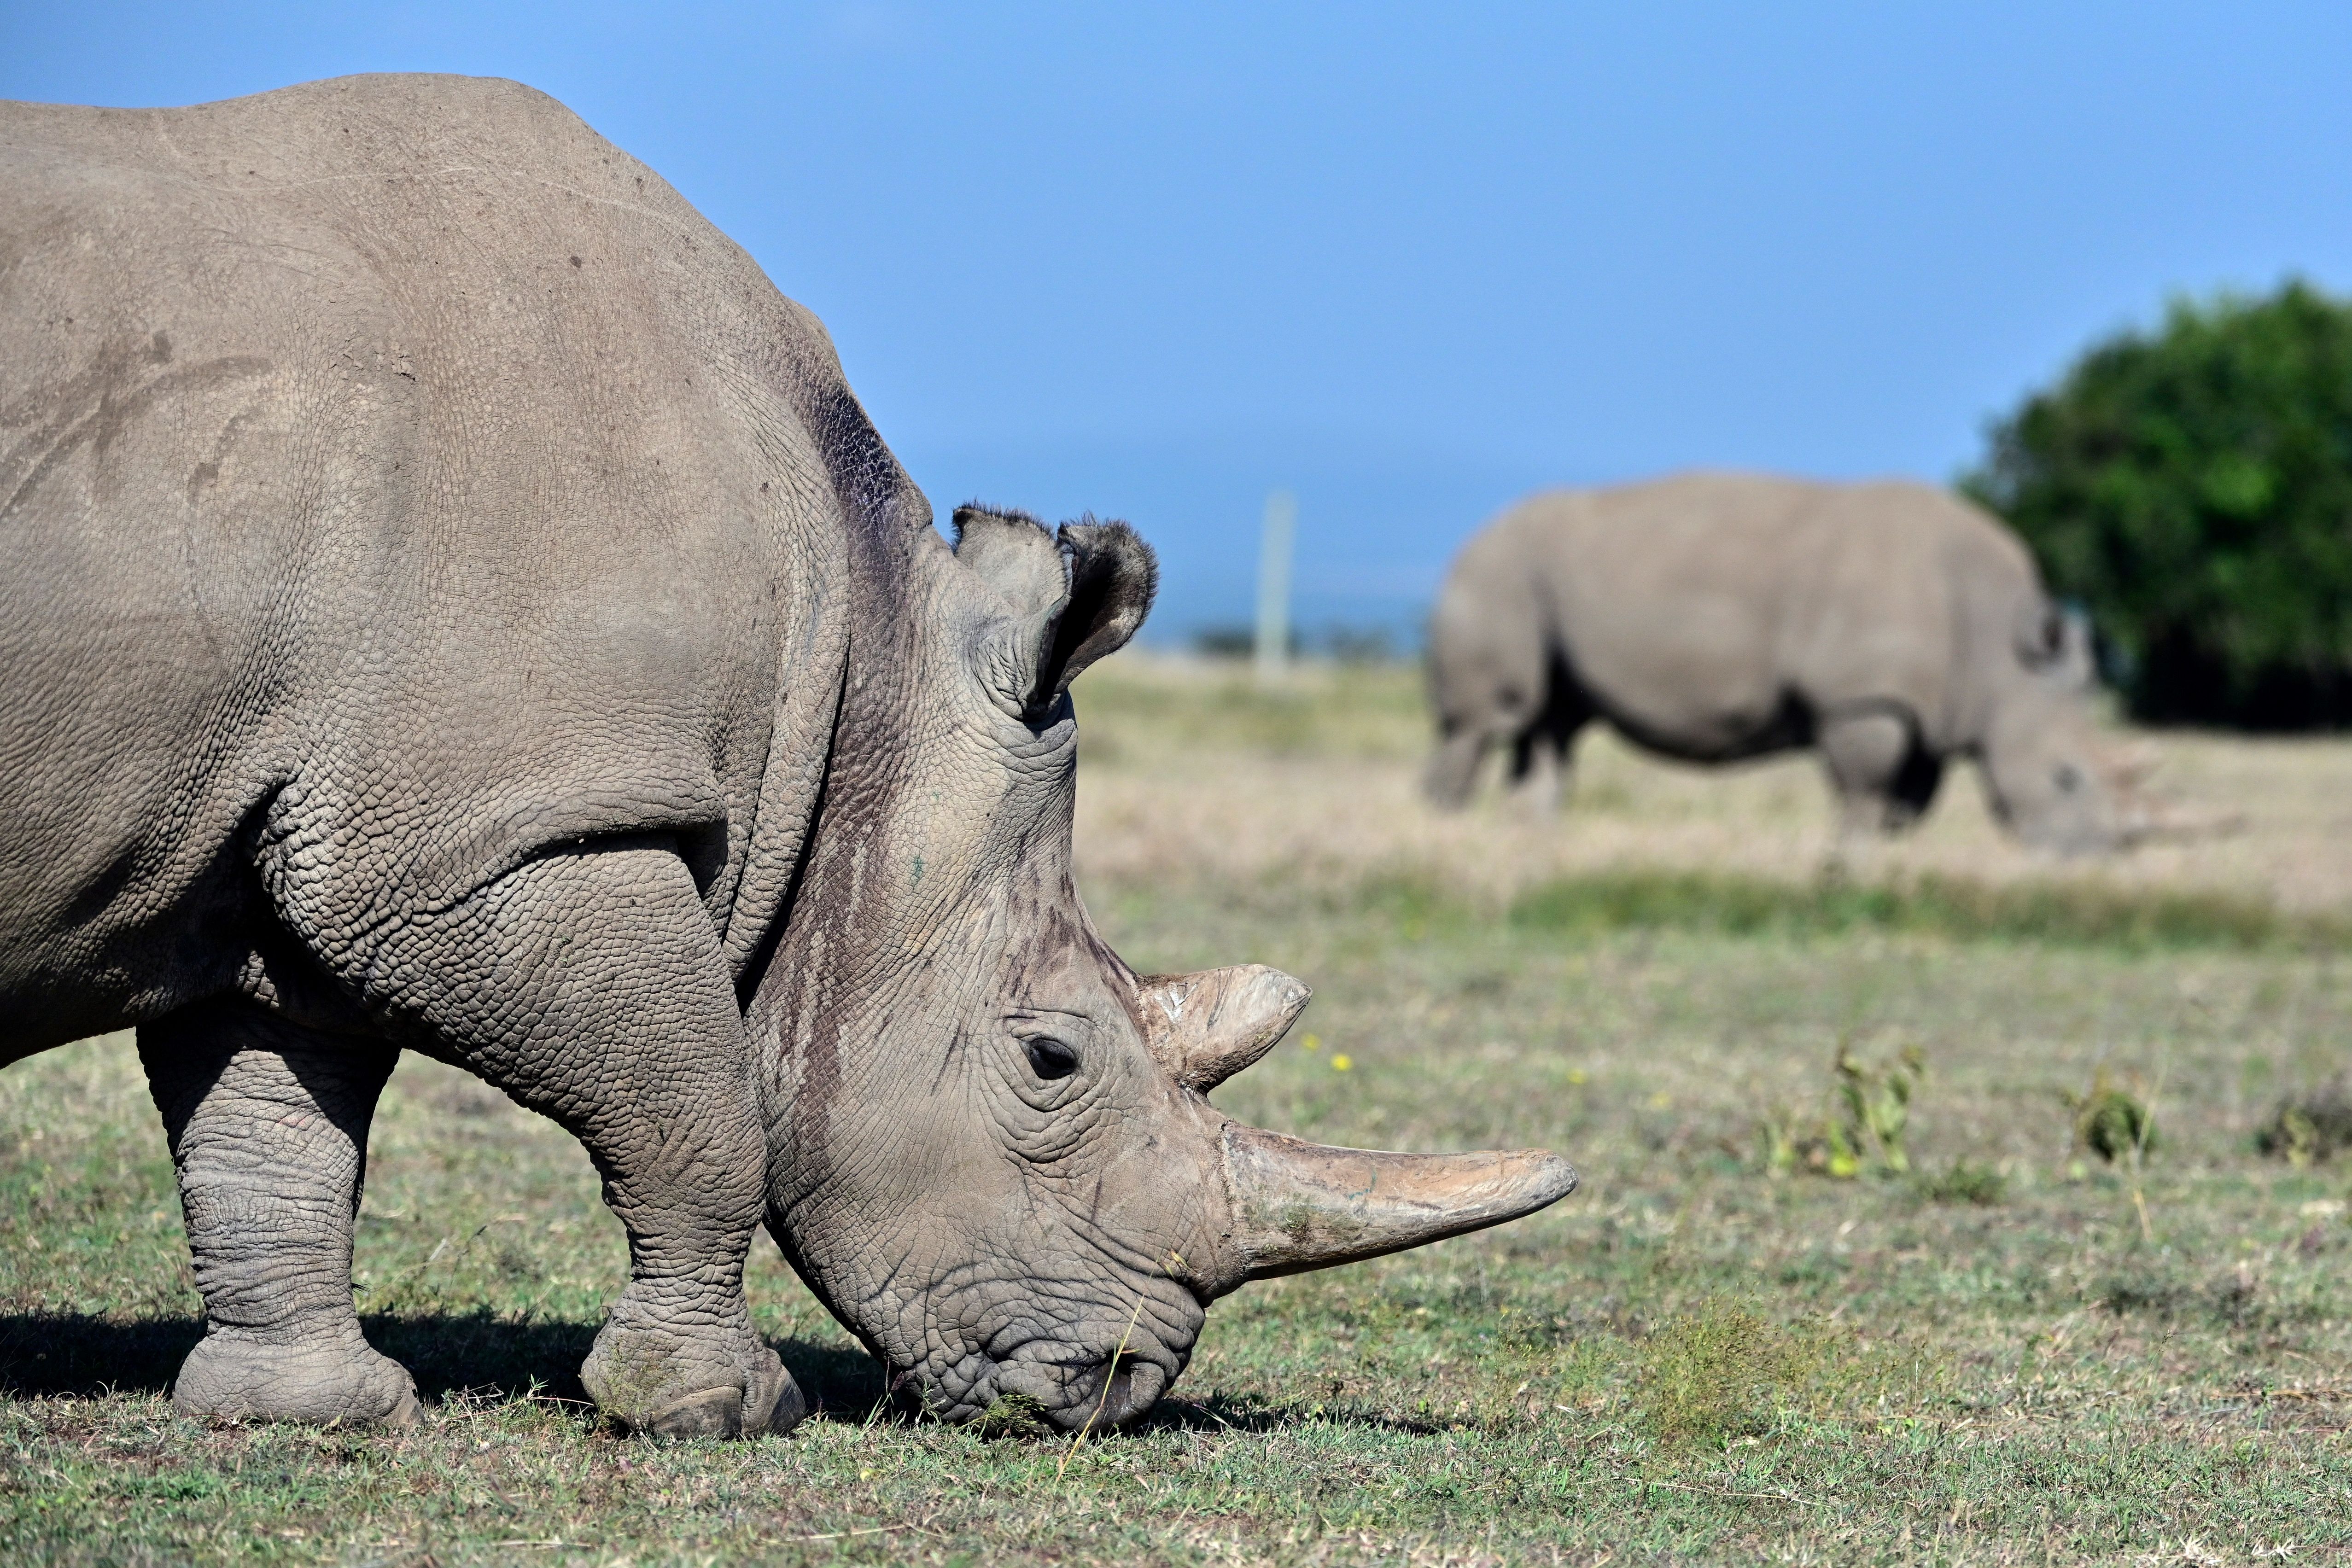 Northern white rhinos in Kenya